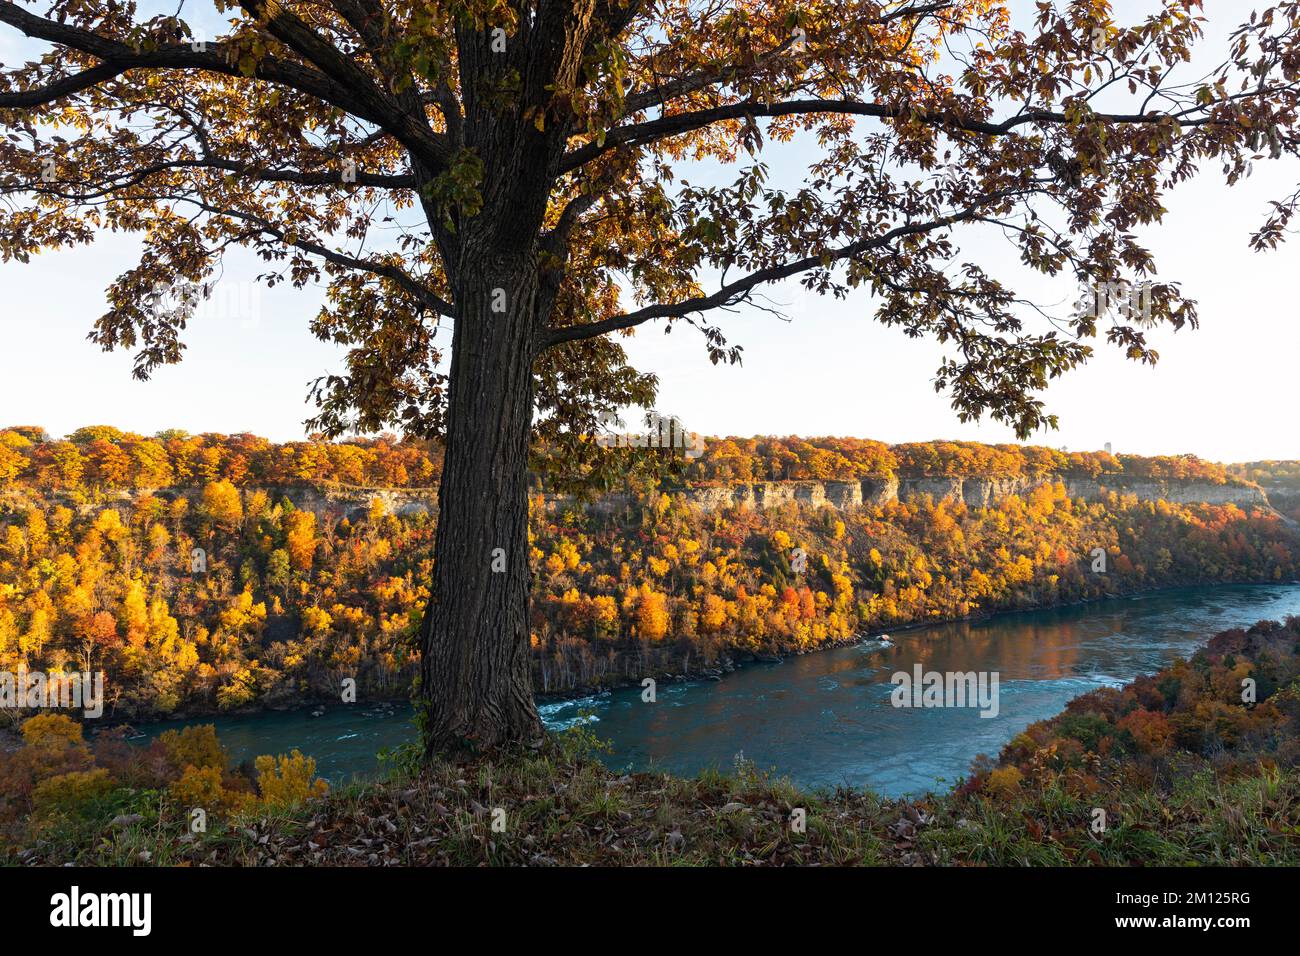 Canada, Ontario, Niagara Falls, la gorge du Niagara et la rivière Niagara en automne avec toutes les couleurs de l'automne Banque D'Images